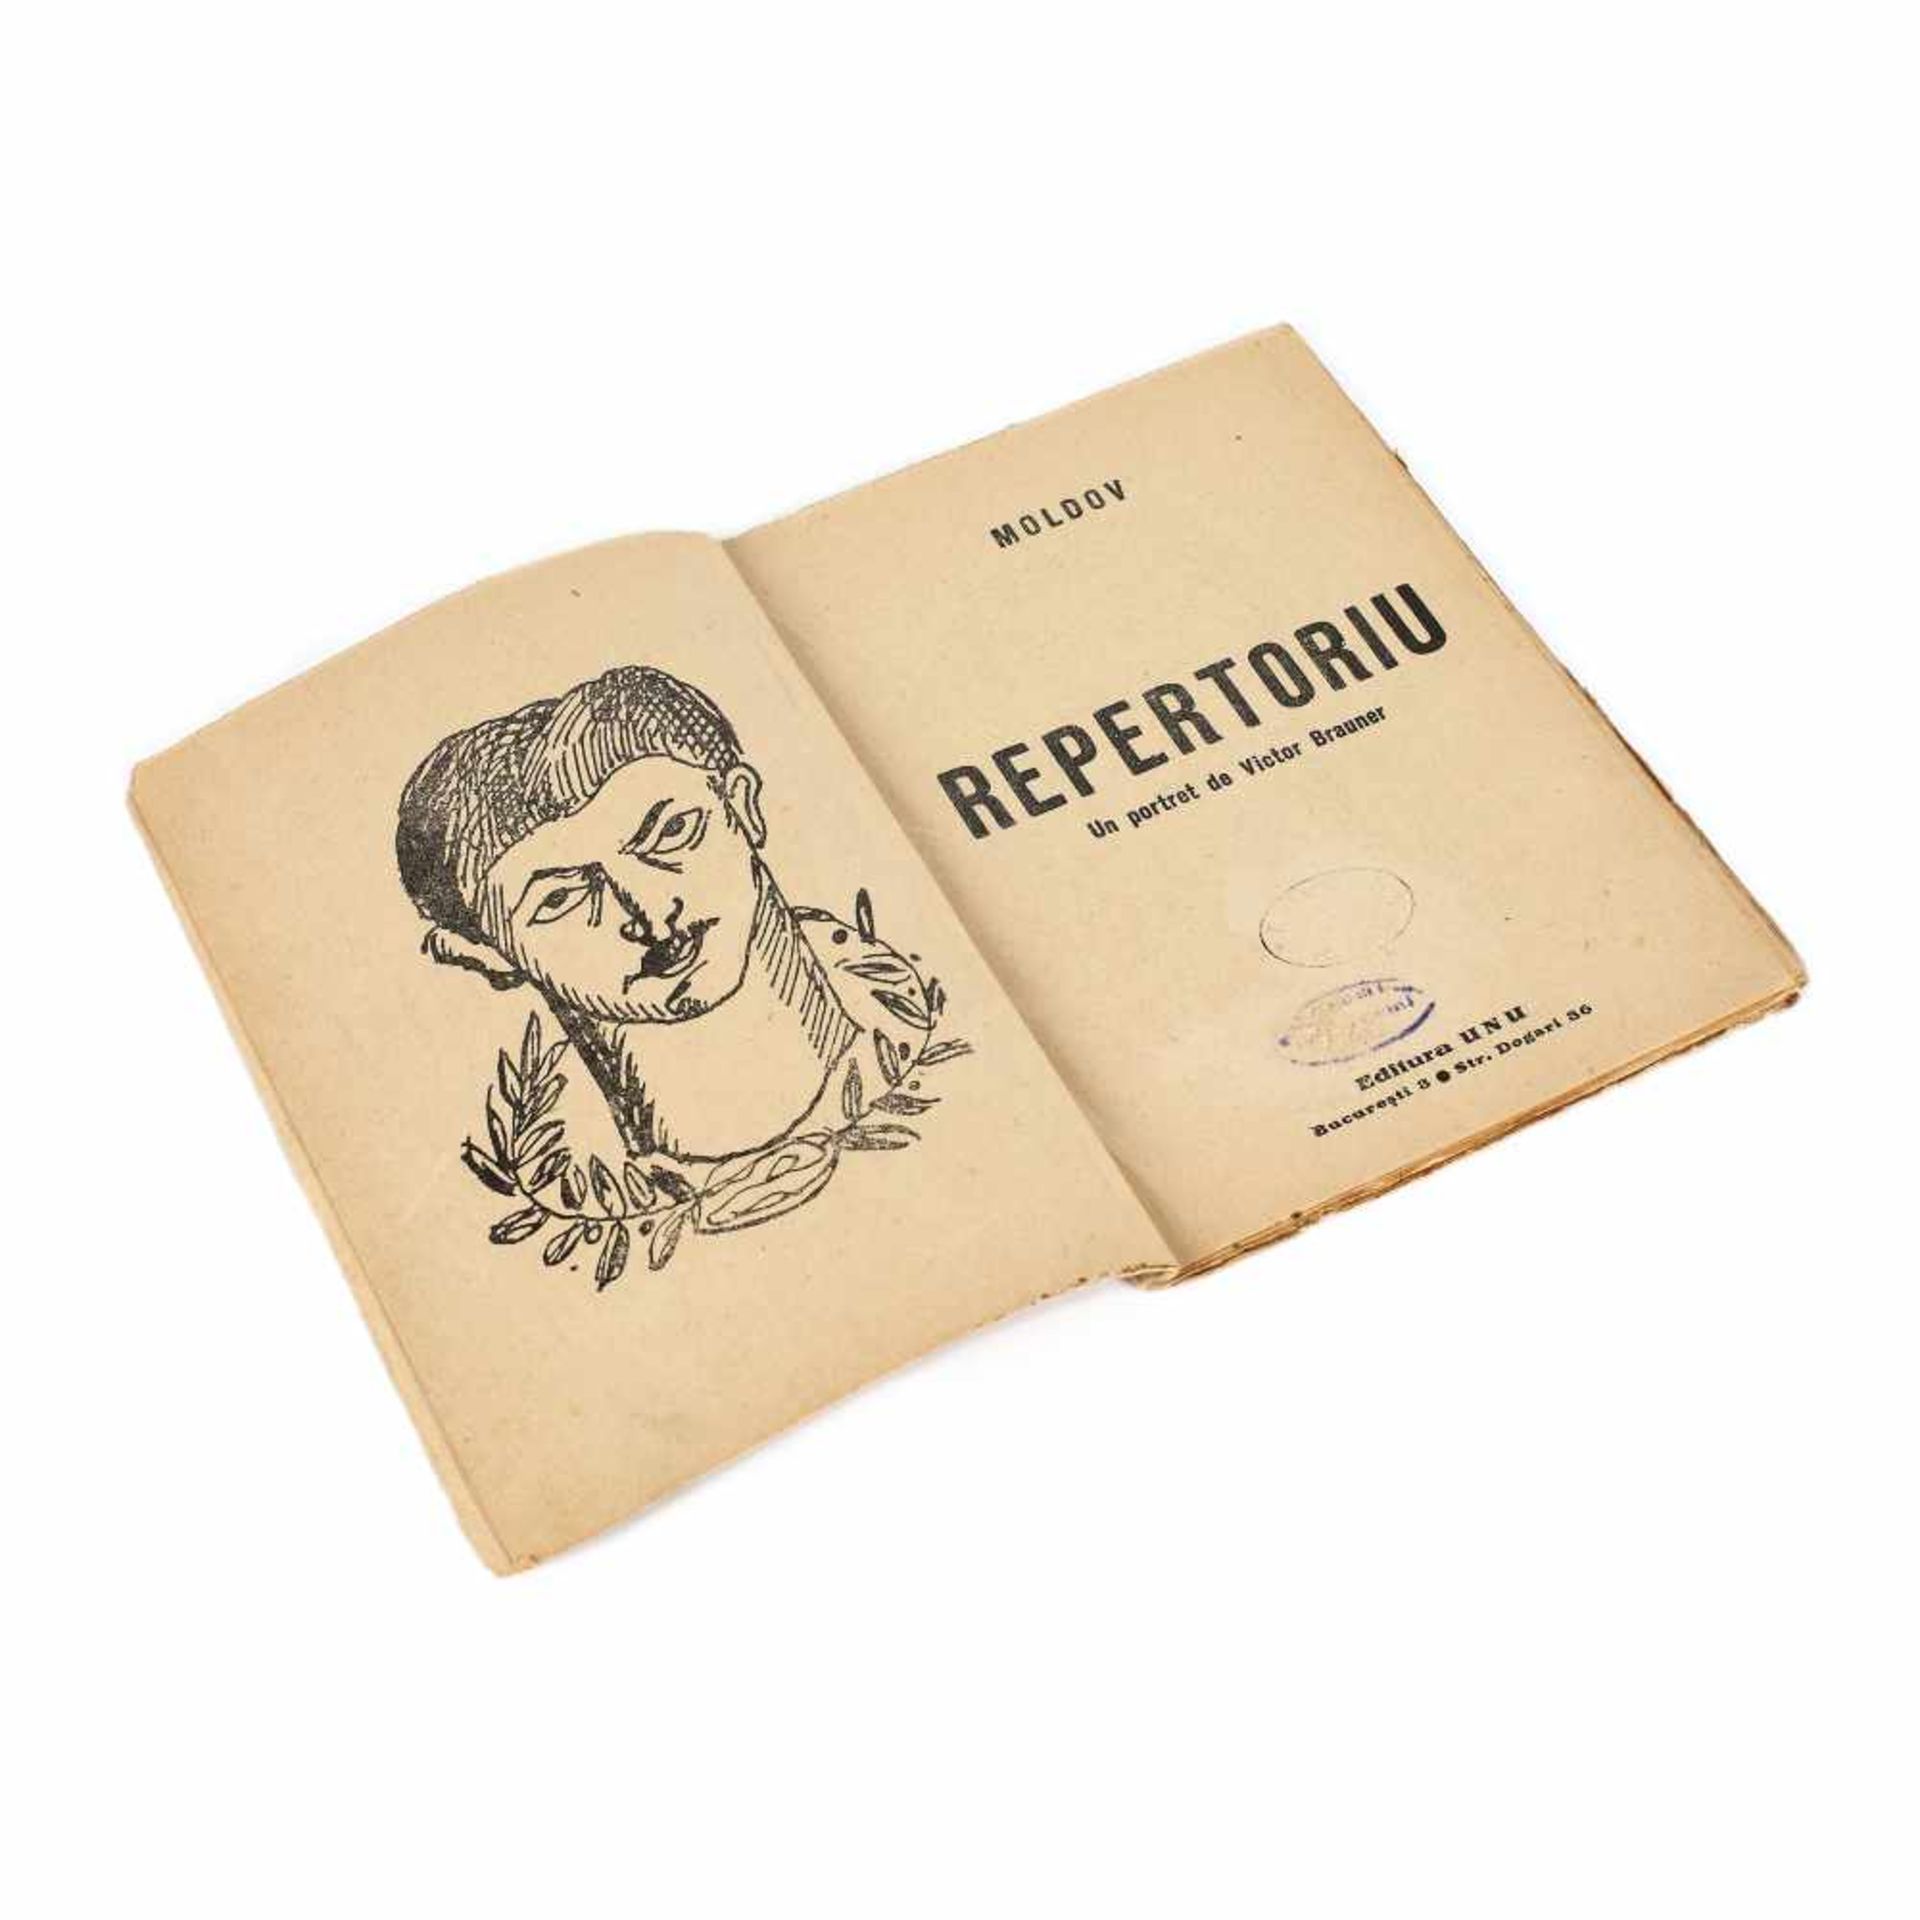 ”Repertoire”, by Moldov (Marcu Taingiu/Mac Tobacco), Bucharest, 1935, with a portrait by Victor